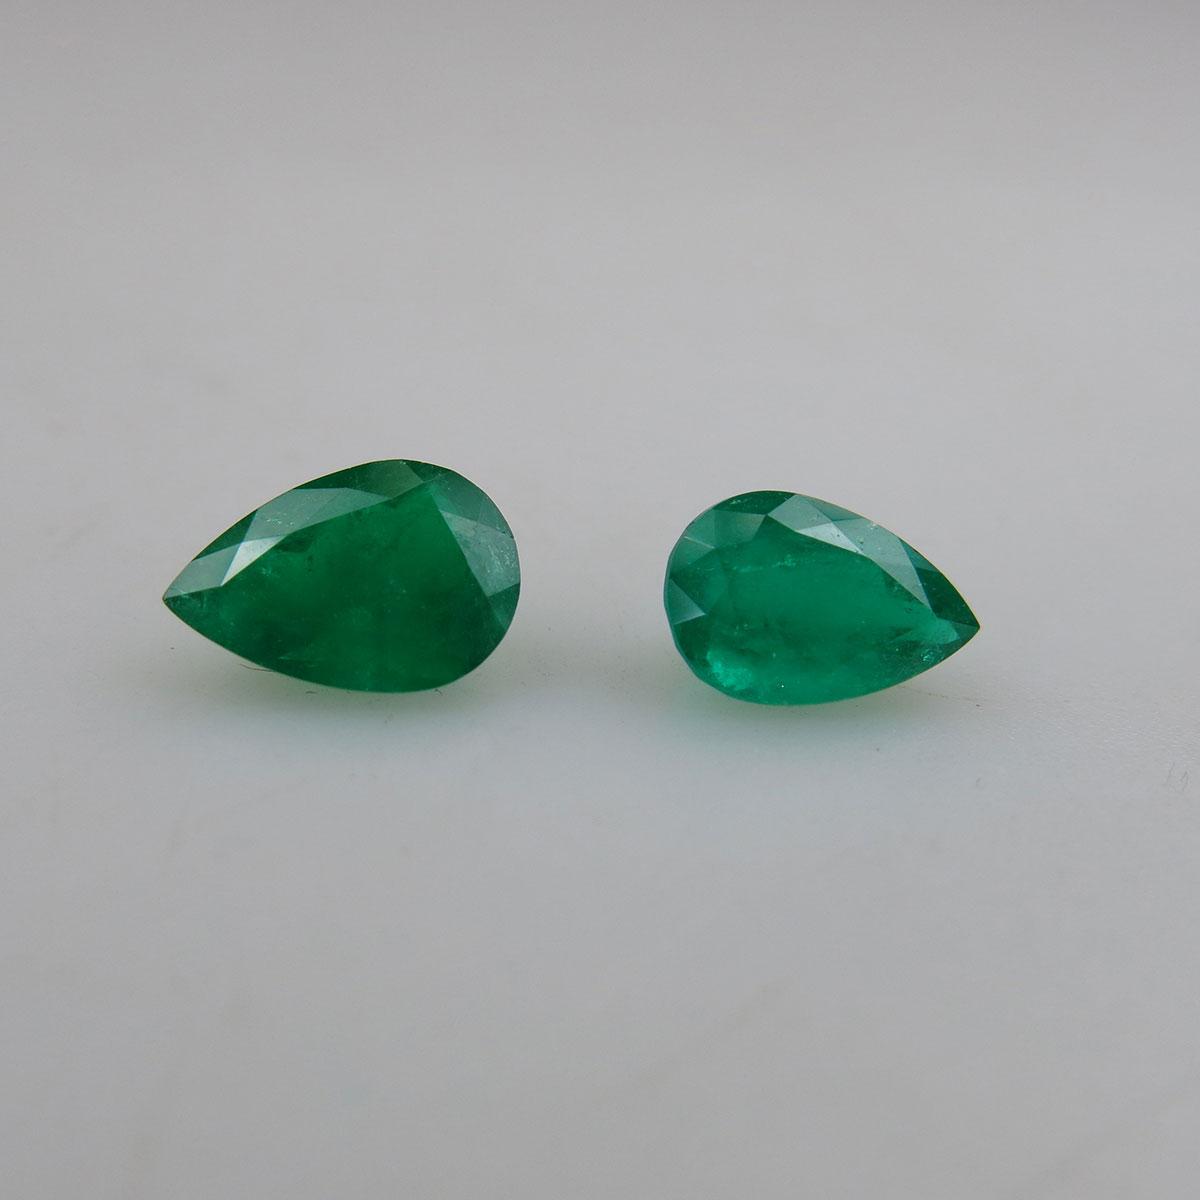 2 Unmounted Pear Cut Emeralds